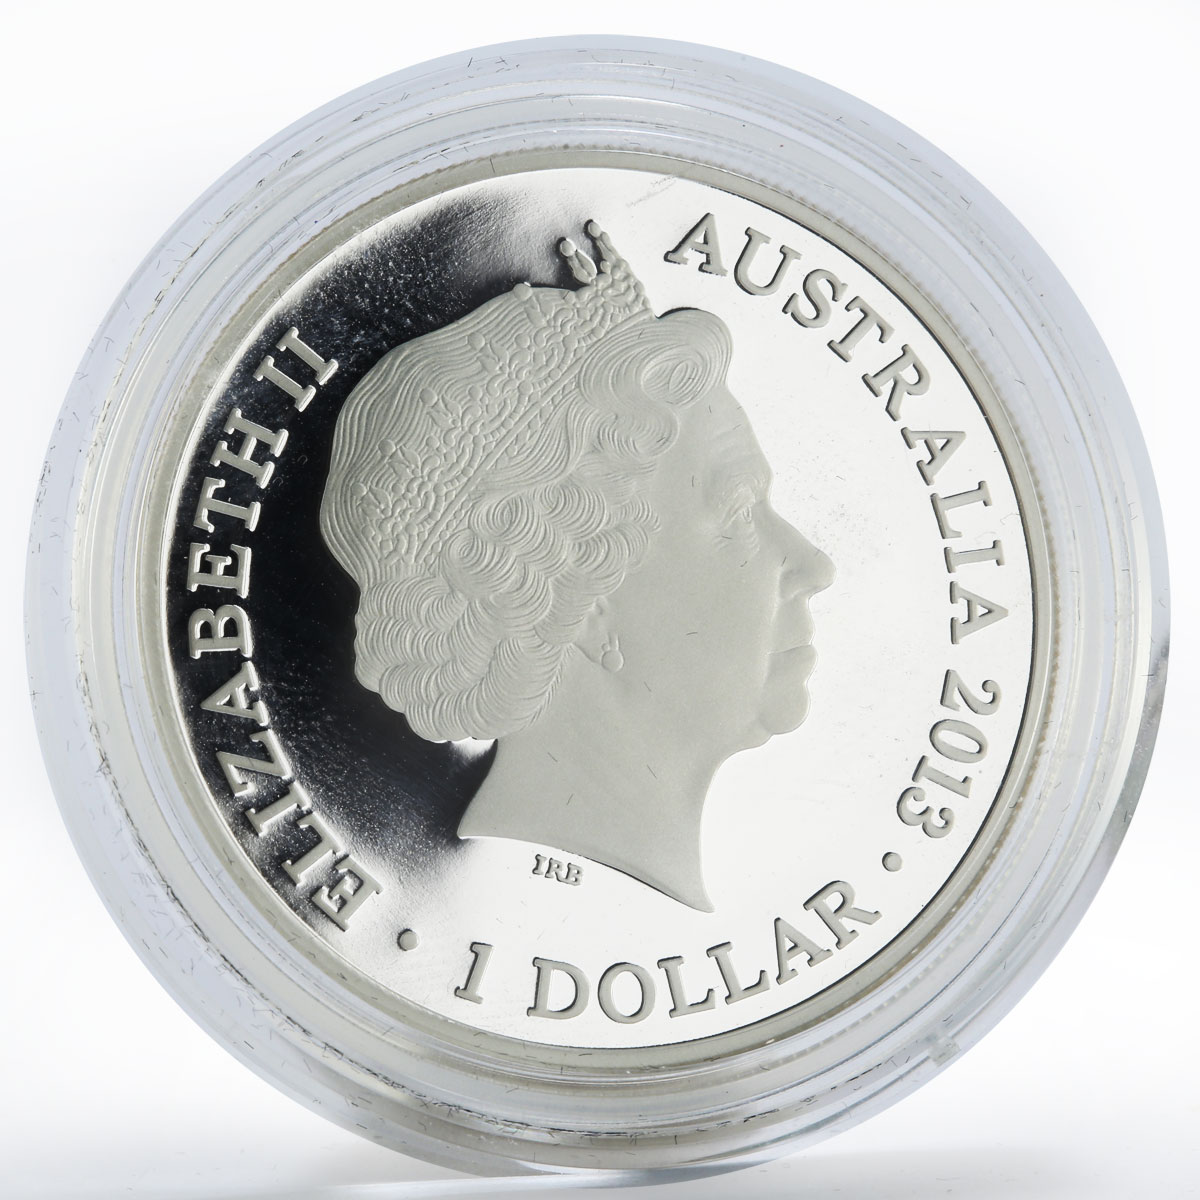 Australia Poland set of 2 coins Kangaroo colored proof silver coin 2013